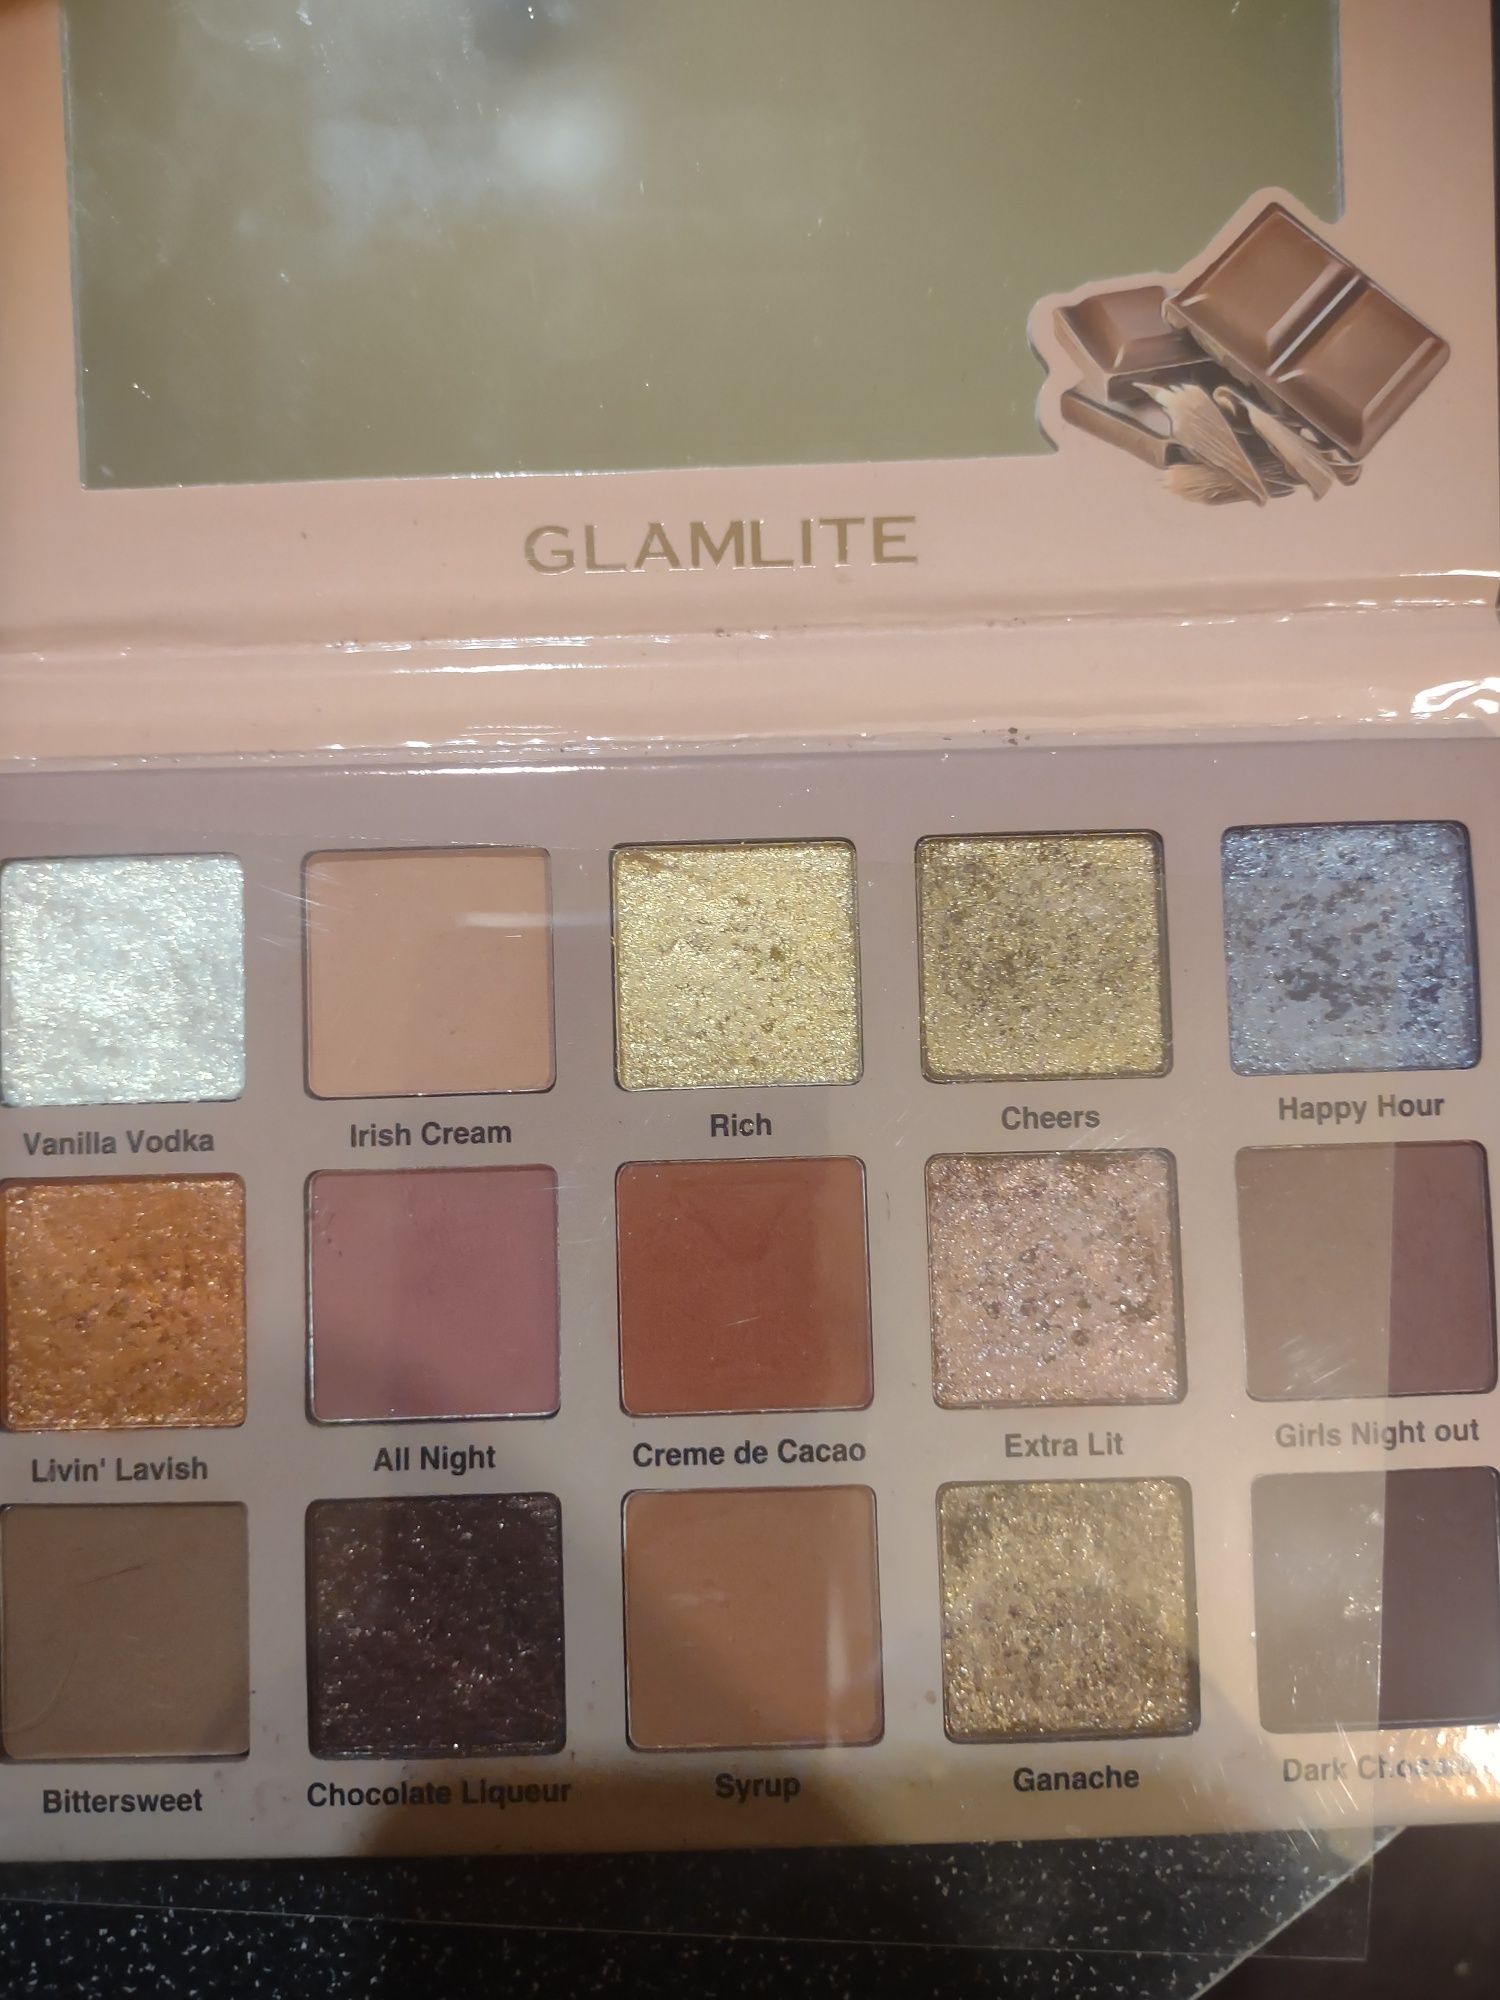 Glamlite, Glam shop